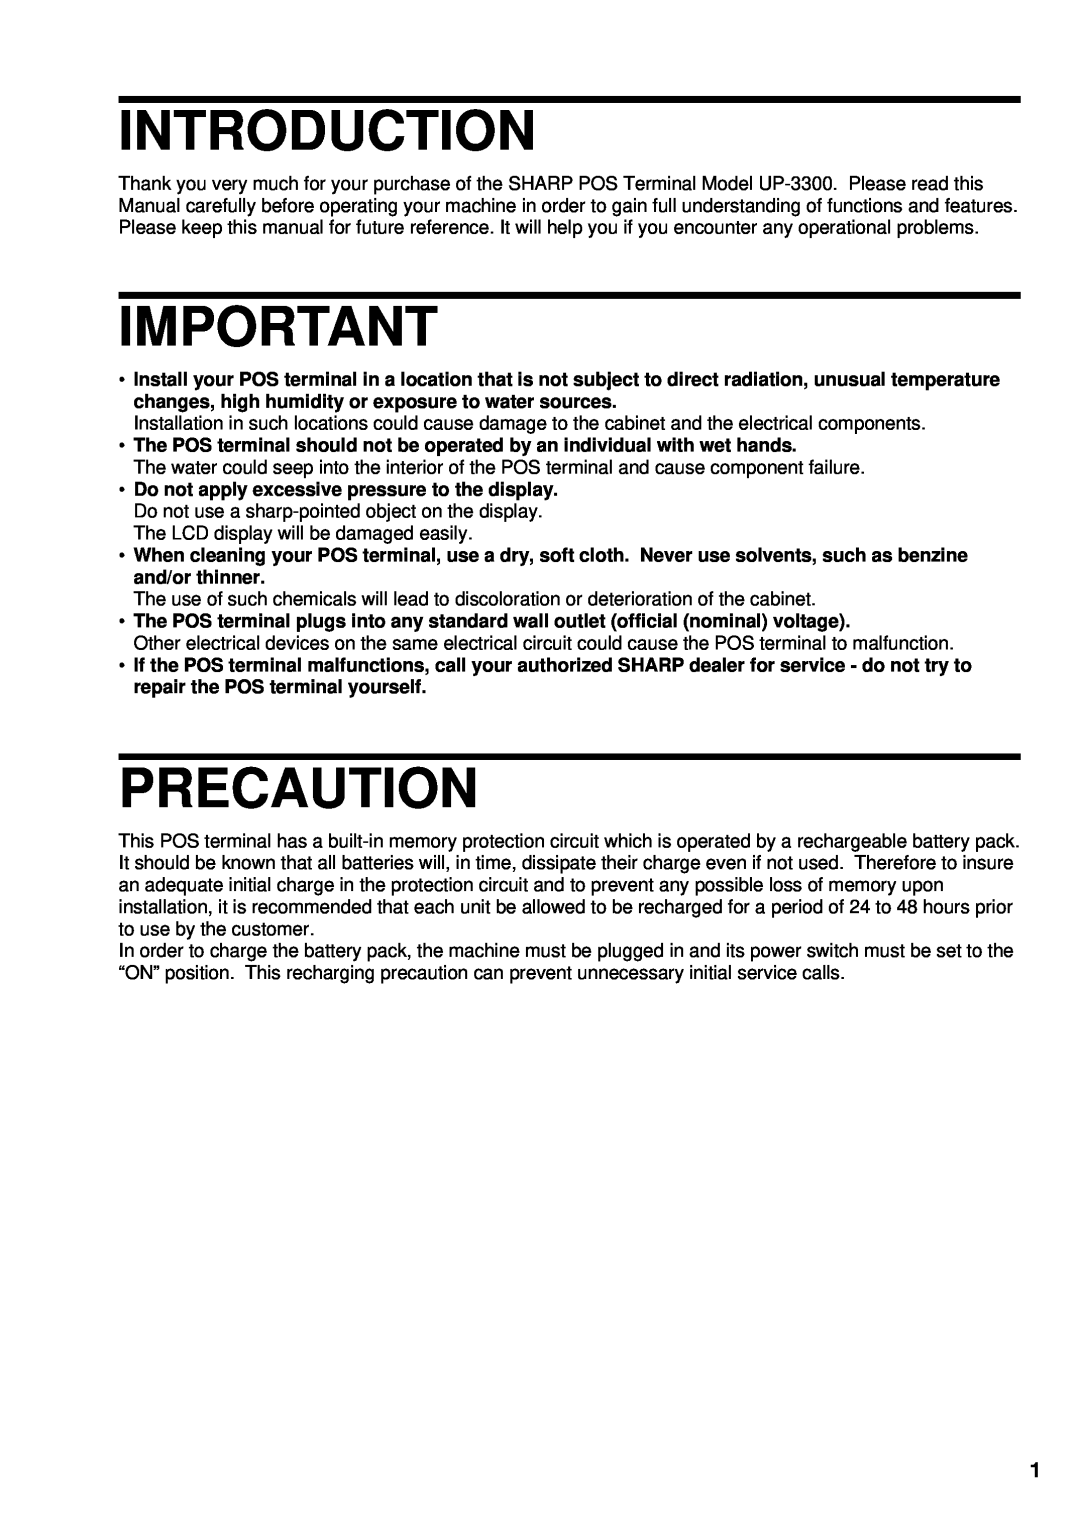 Sharp UP-3300 instruction manual Introduction, Precaution 